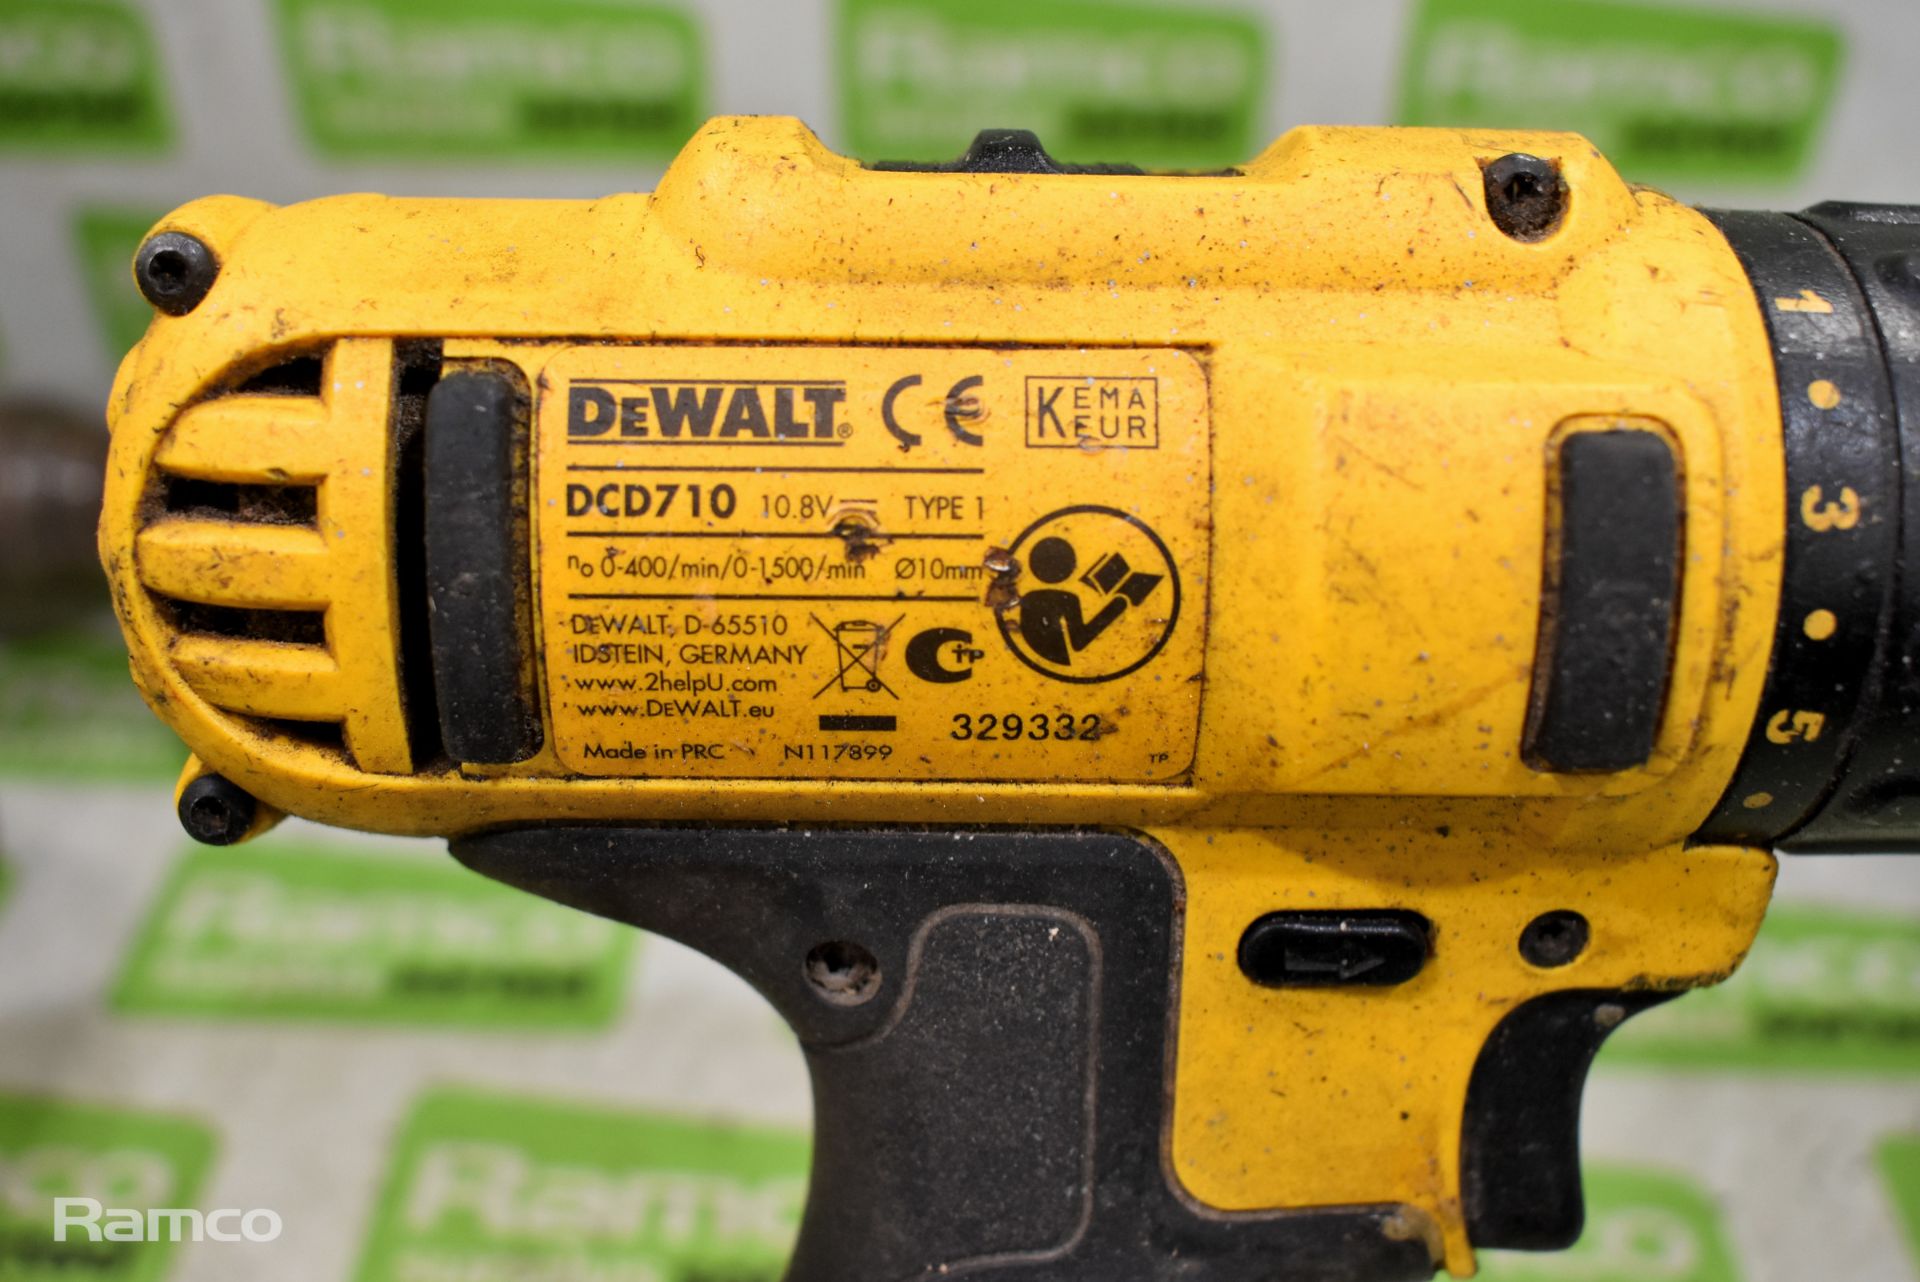 DeWalt drills and batteries - AS SPARES OR REPAIRS - Image 13 of 15